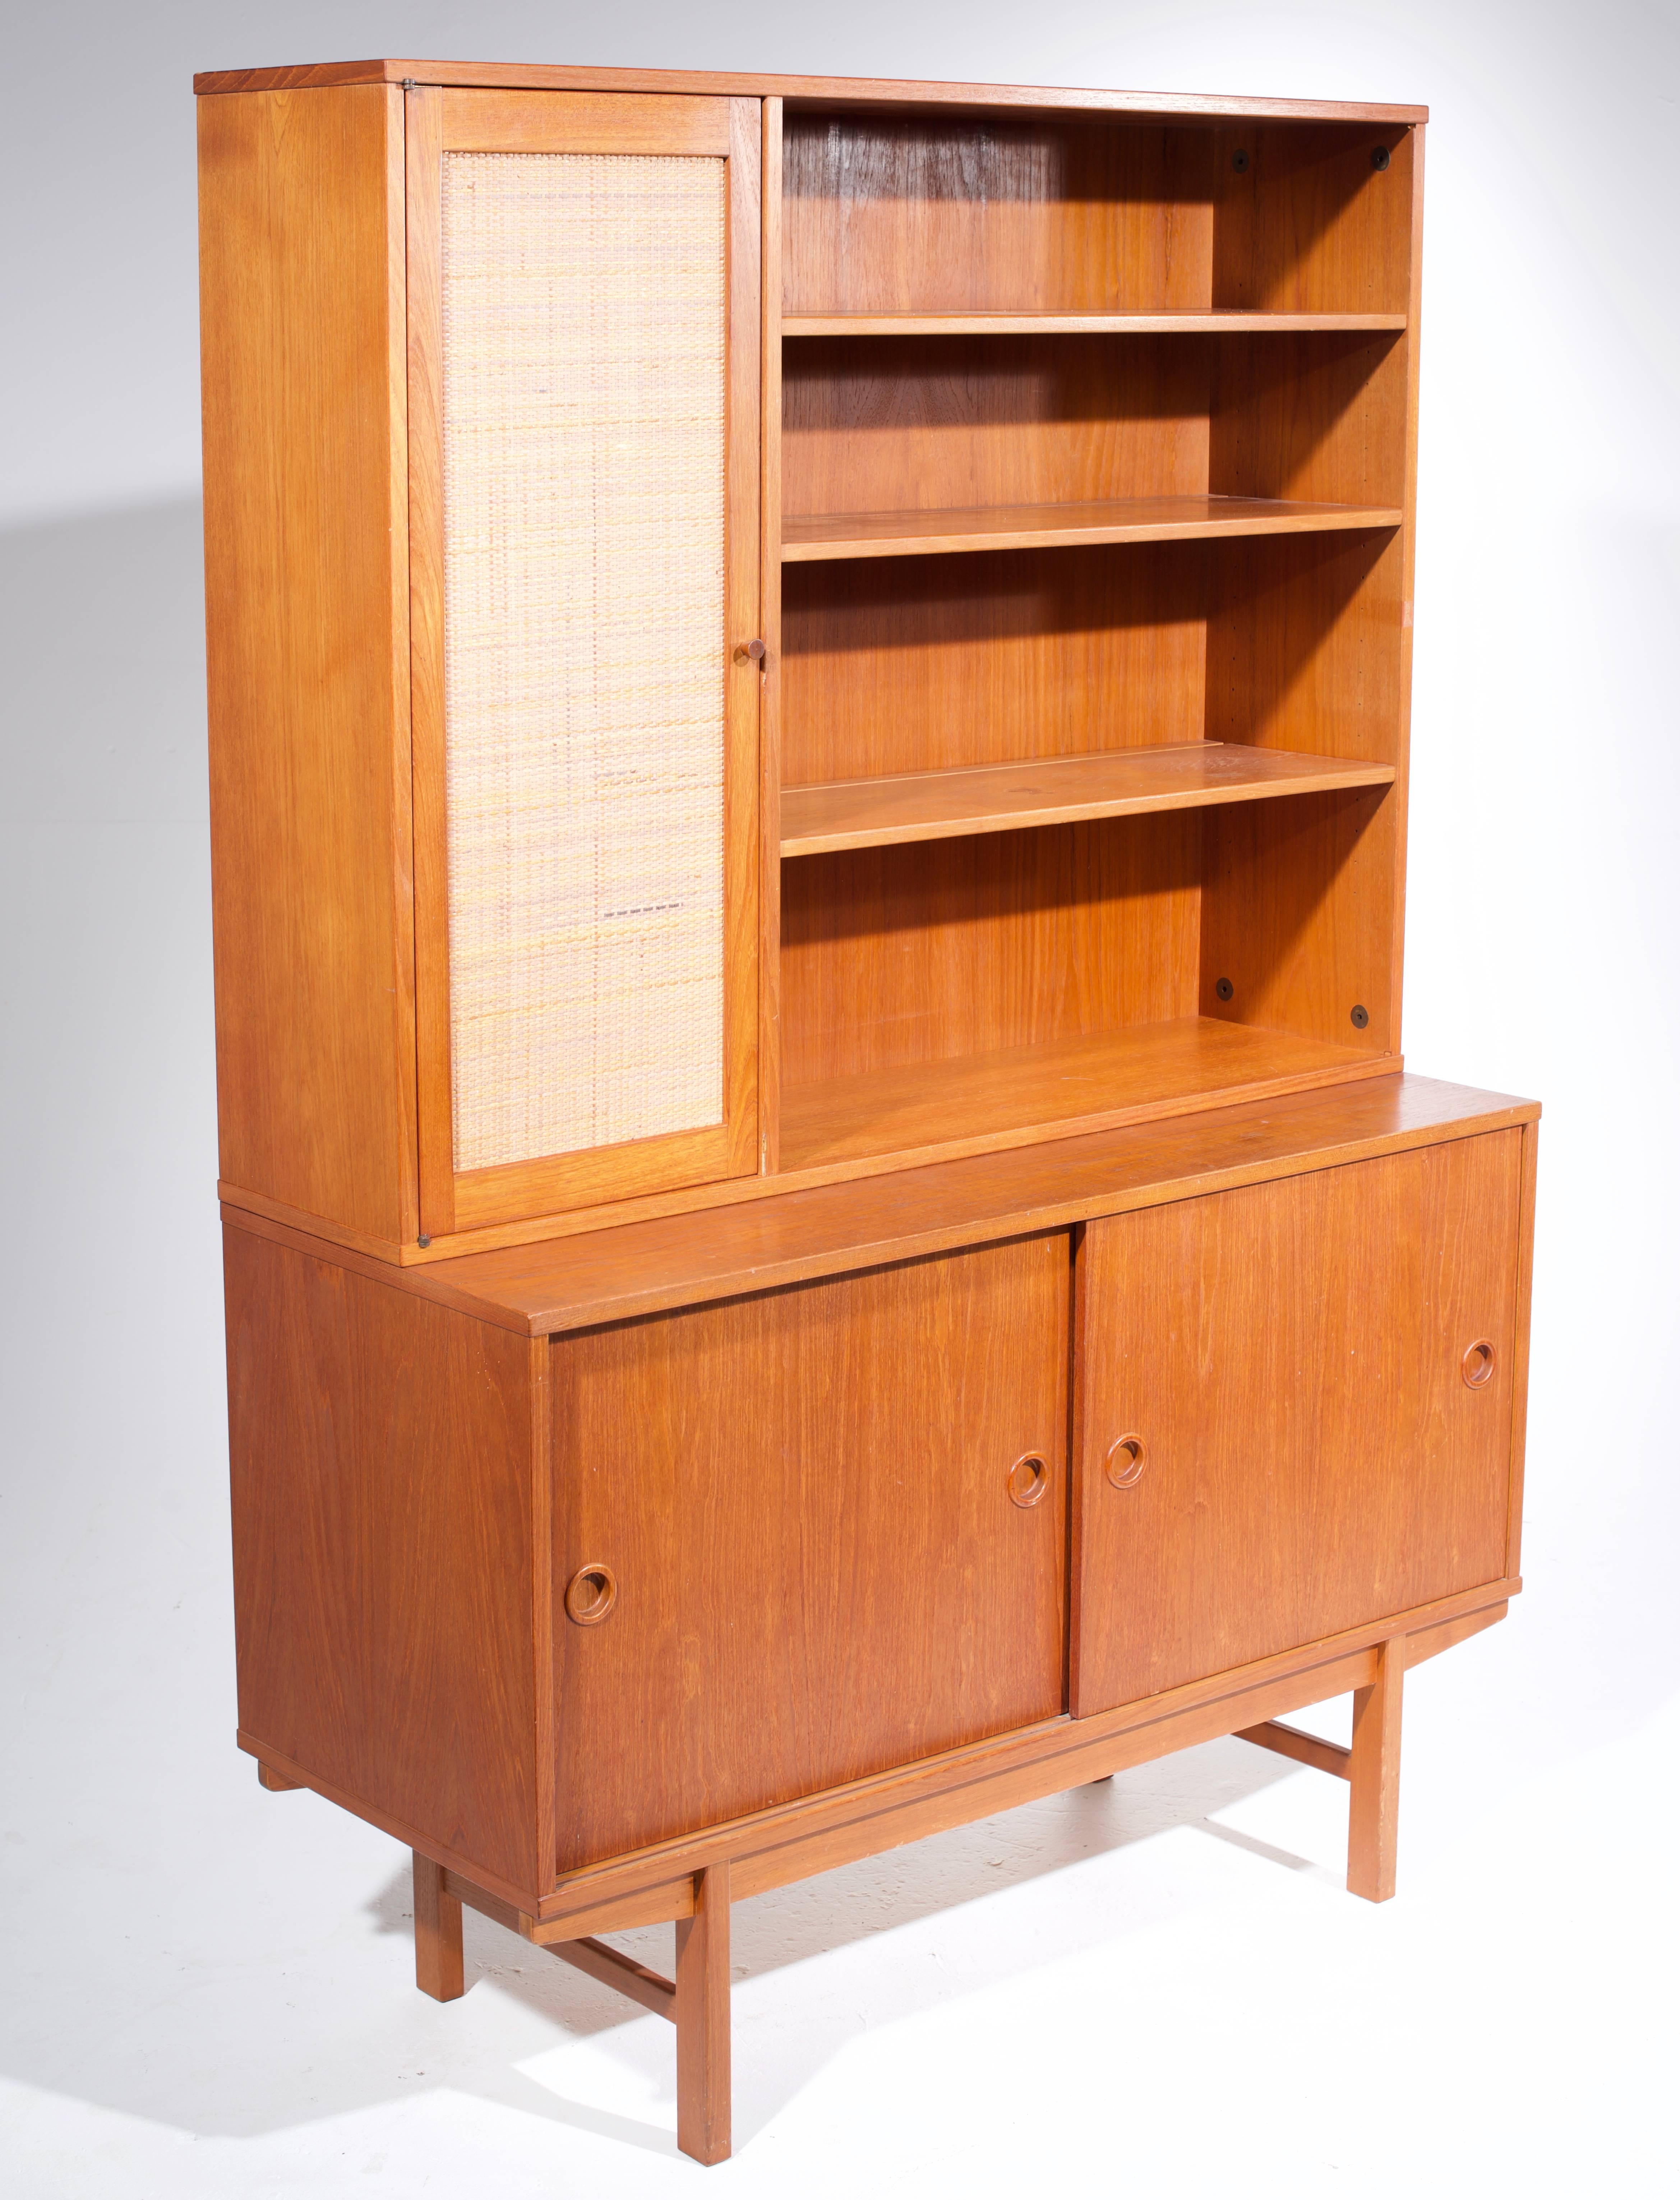 Teak credenza and removable shelving cabinet designed by Folke Ohlsson for DUX of Sweden, circa 1960s.